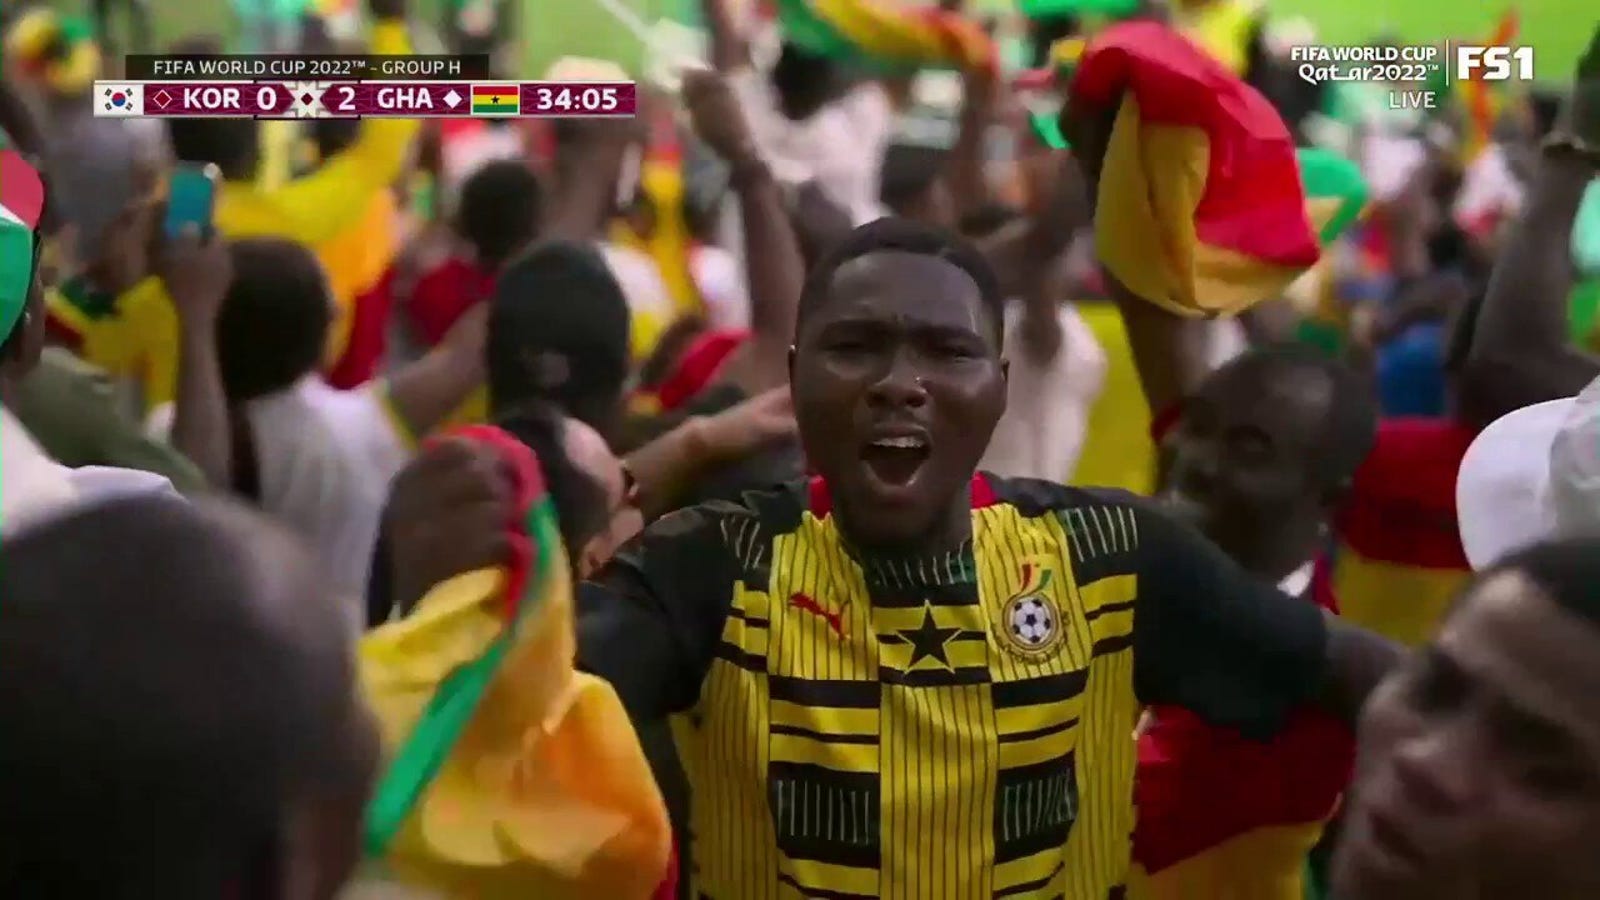 El ghanés Mohamed Kudus marca un gol contra la República de Corea en 34 minutos |  copa del mundo 2022